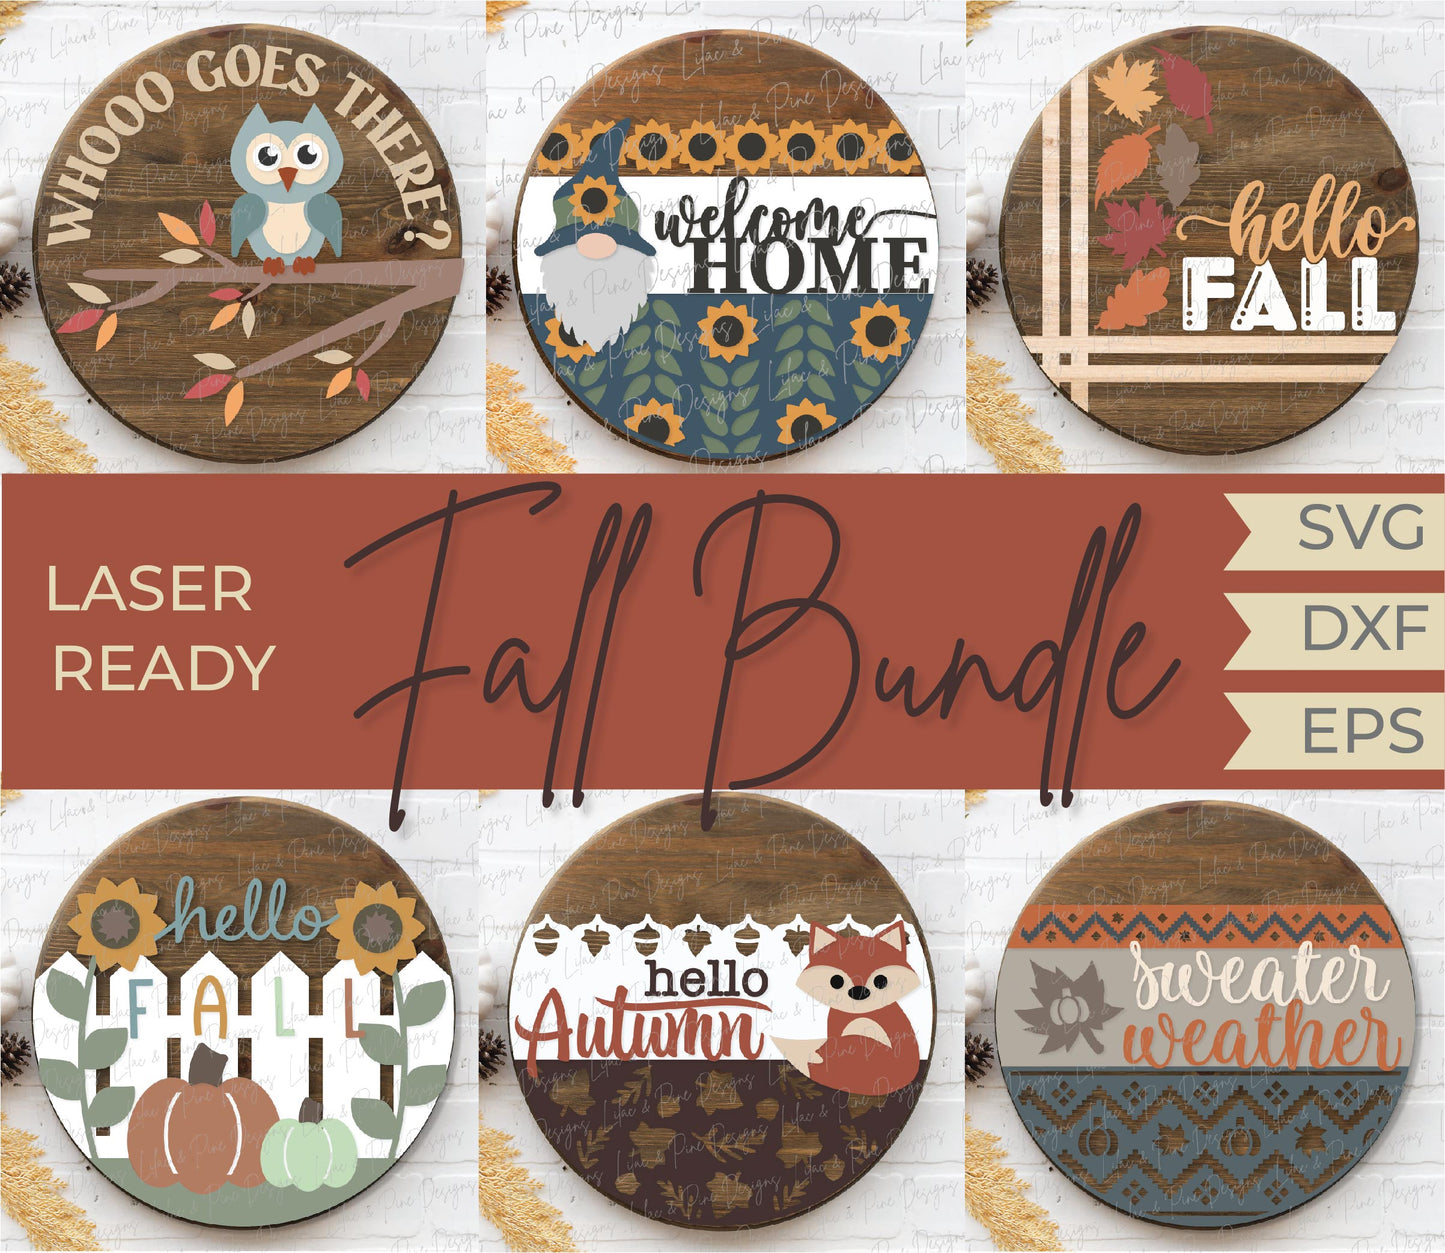 Fall Door Hanger Bundle Volume 3, 24 FILES, Fall Welcome Signs, Fall SVG bundle, laser SVG file